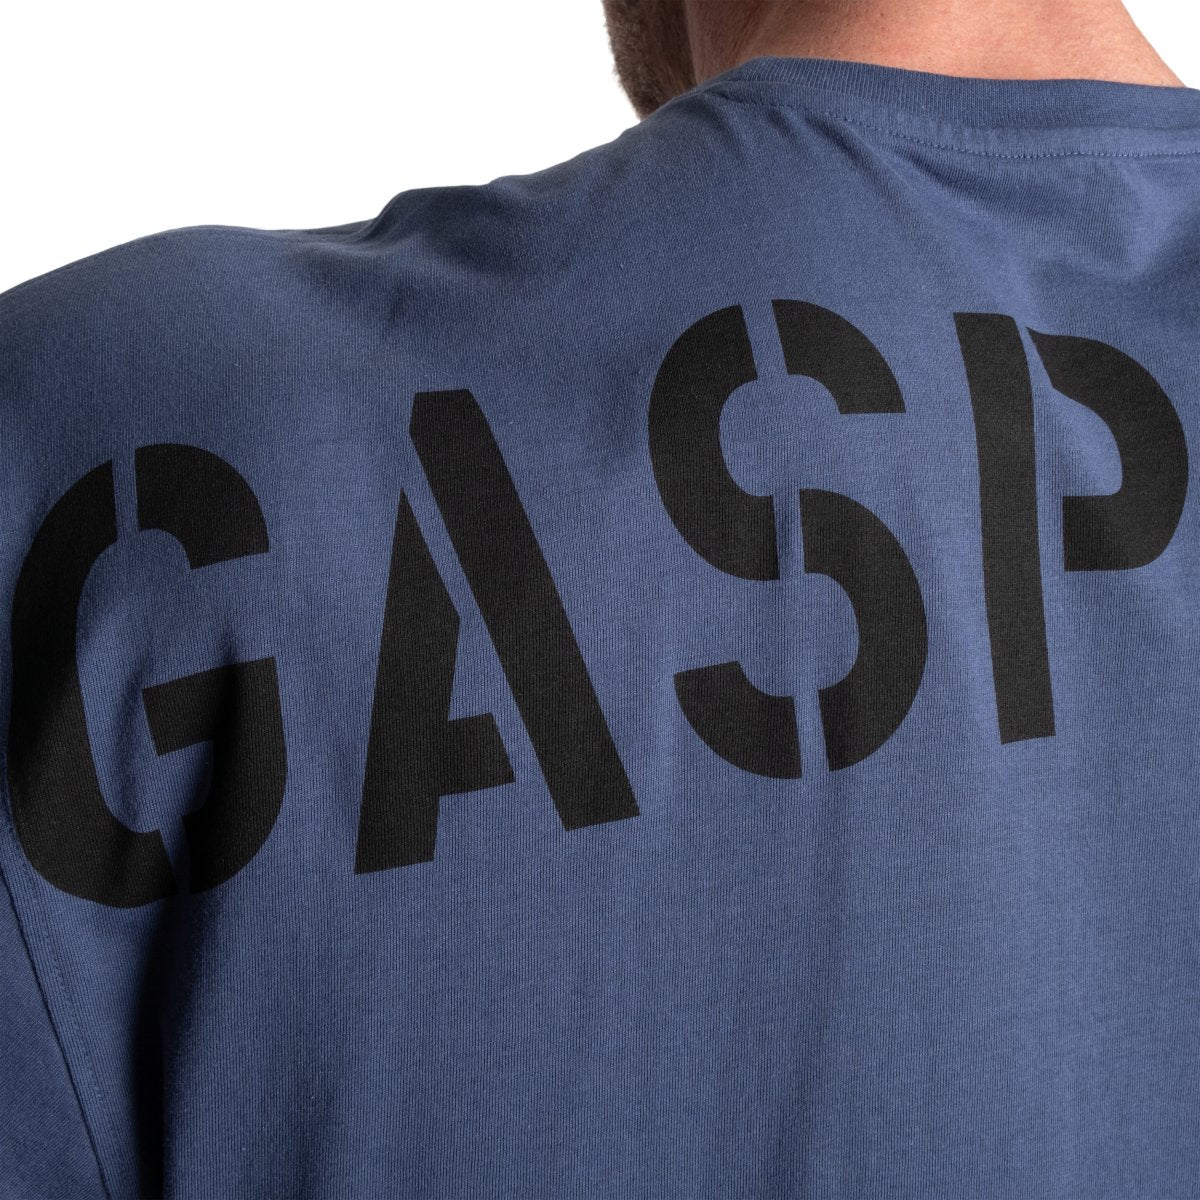 GASP Division Iron Tee - Sky Blue - Urban Gym Wear